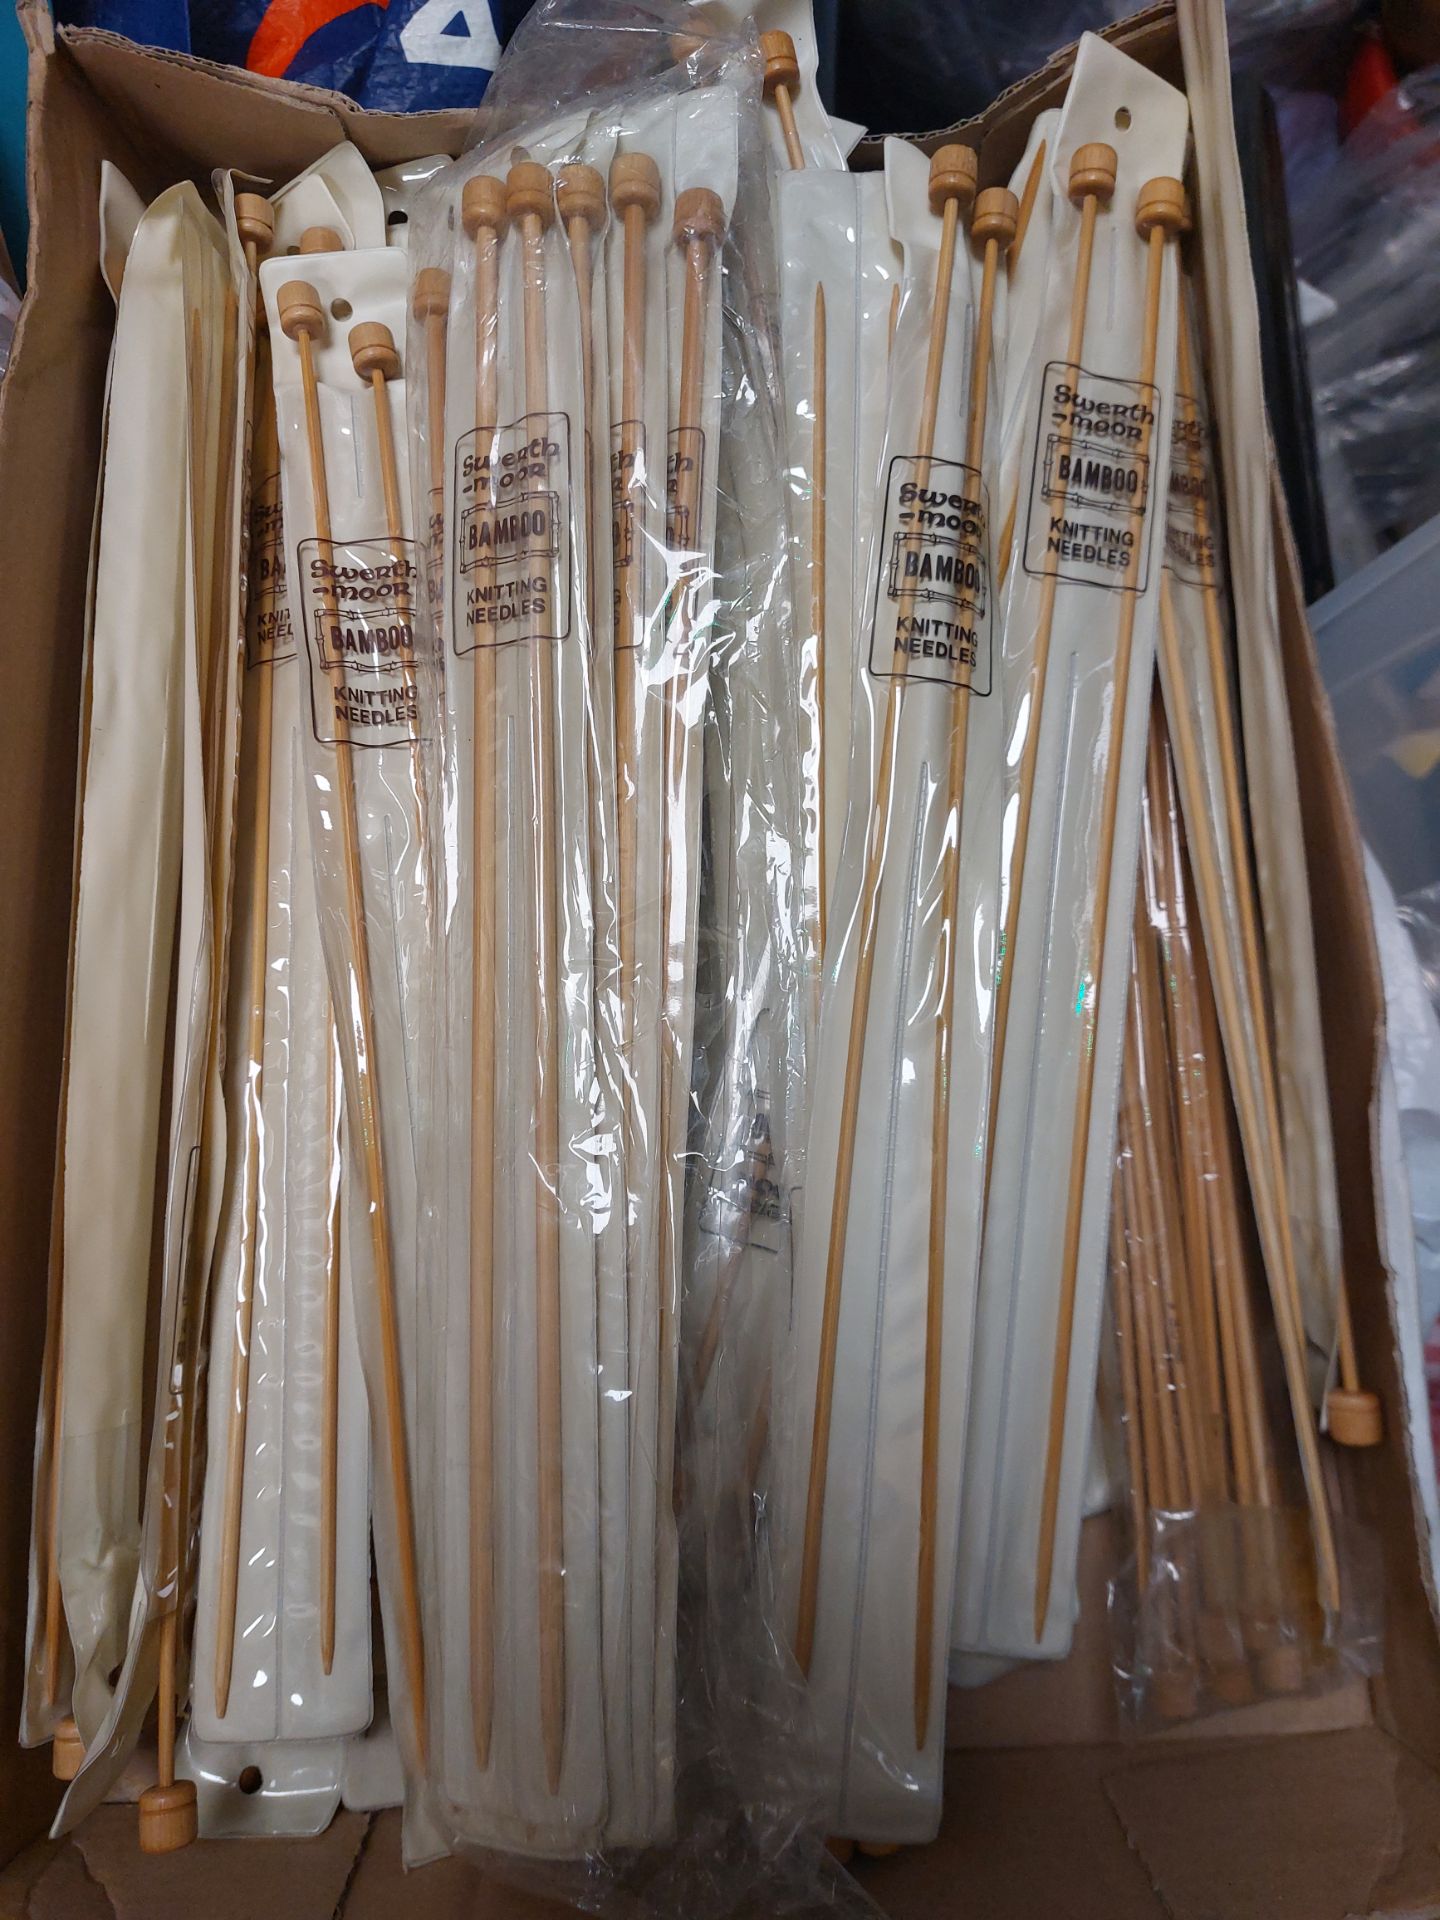 Bamboo and metal knitting needles 20 packs - Image 3 of 3